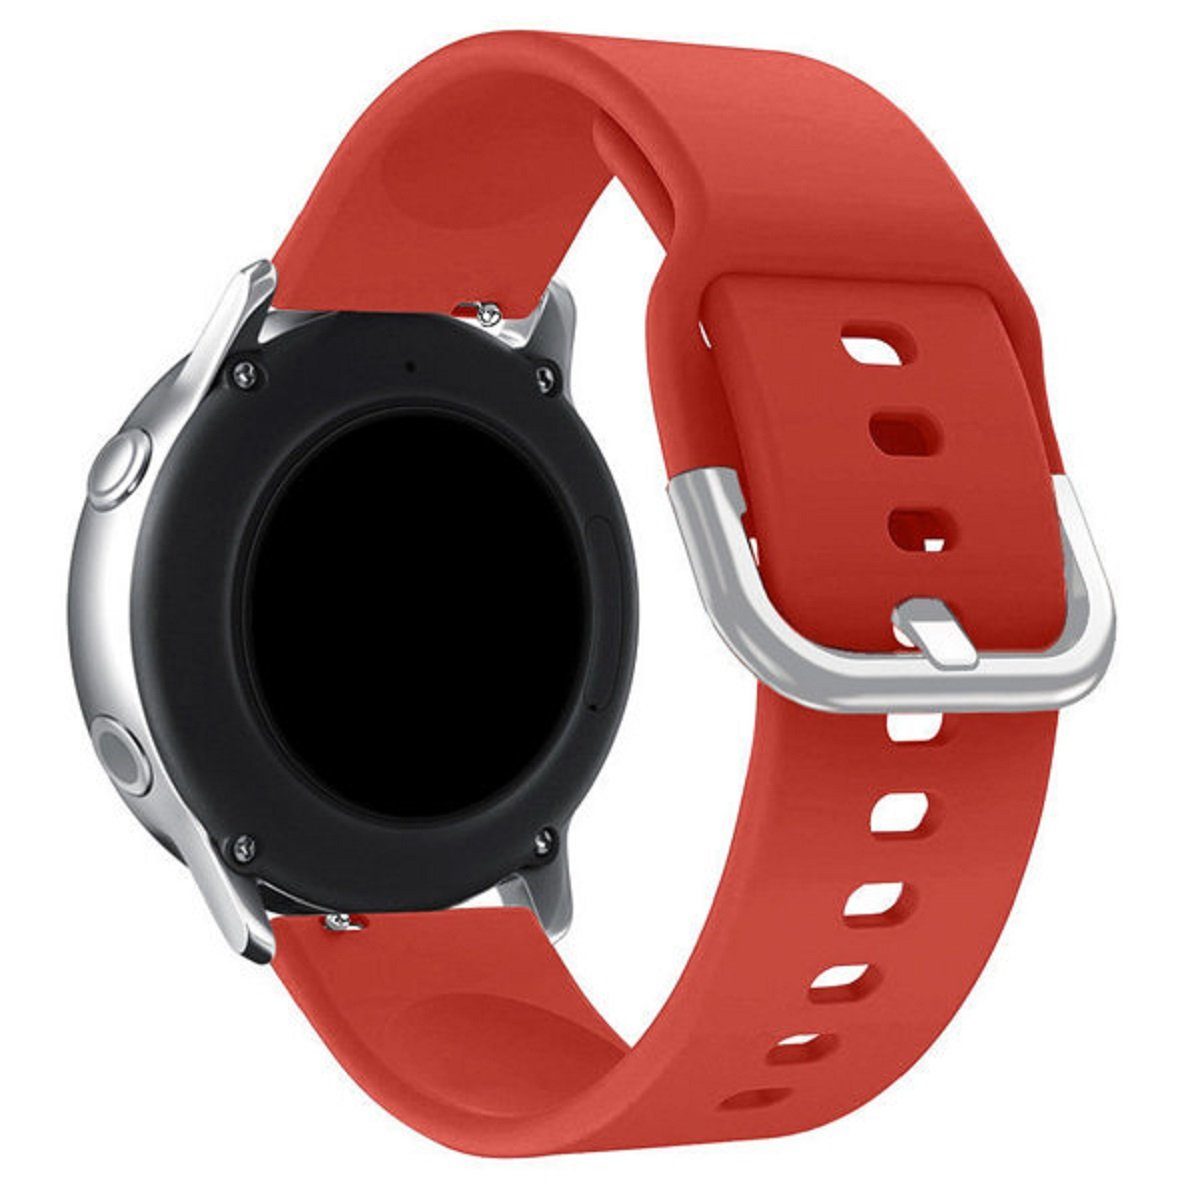 Hurtel Uhrenarmband Silikonarmband Ersatz Smartwatch-Armband universal 22mm Breite Rot